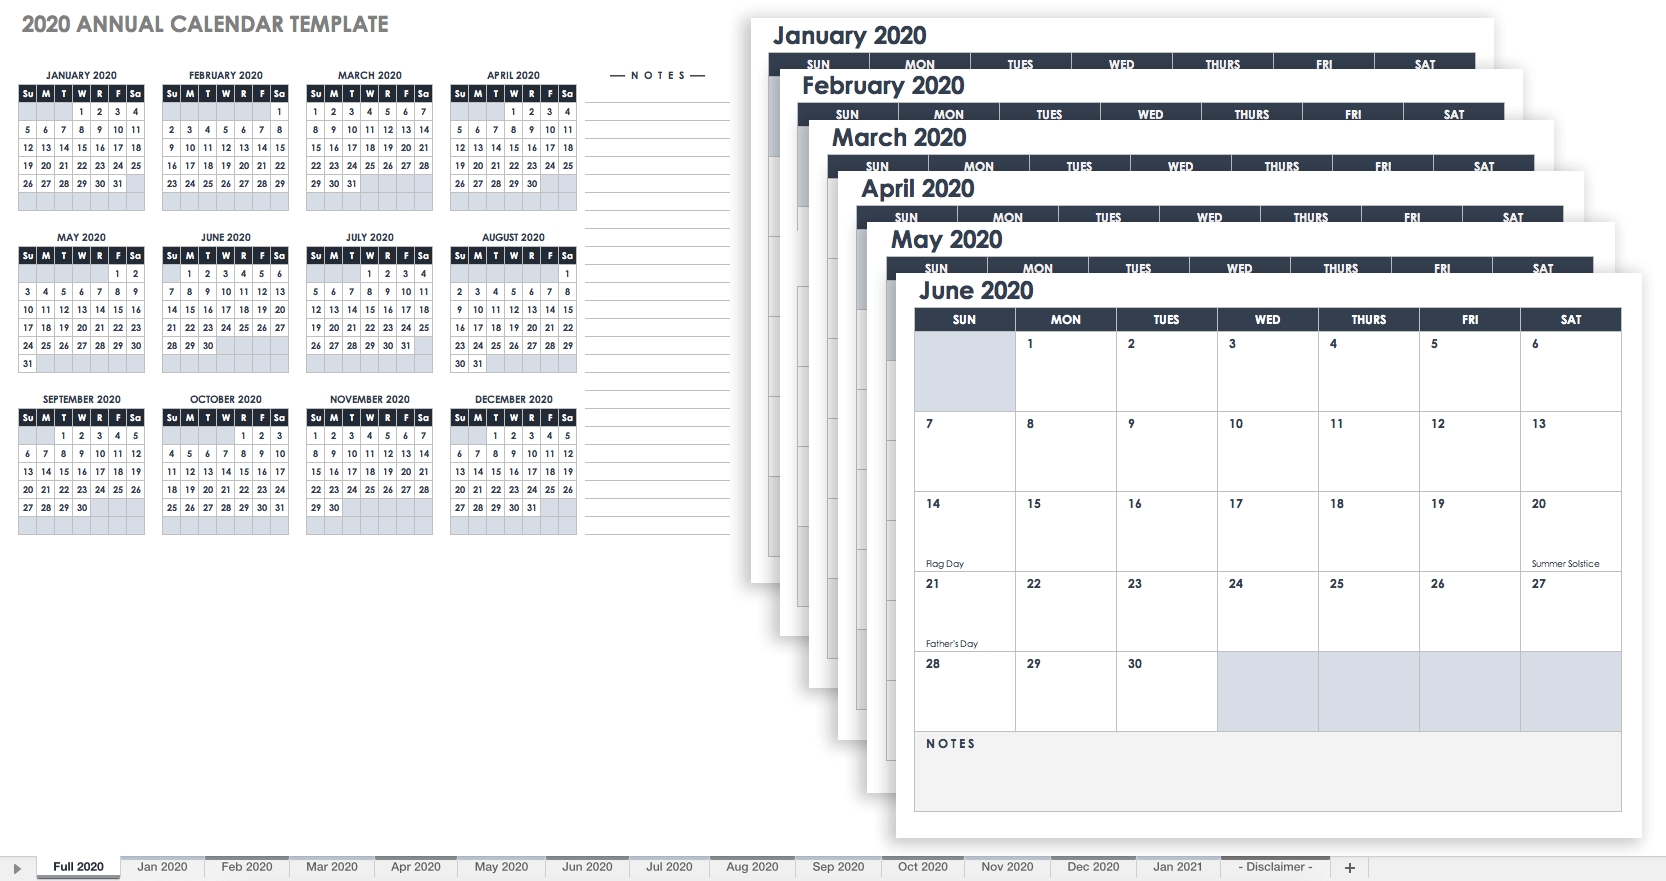 Free Blank Calendar Templates - Smartsheet-Weekly Calendar 2020 Template Students 7 Days A Week